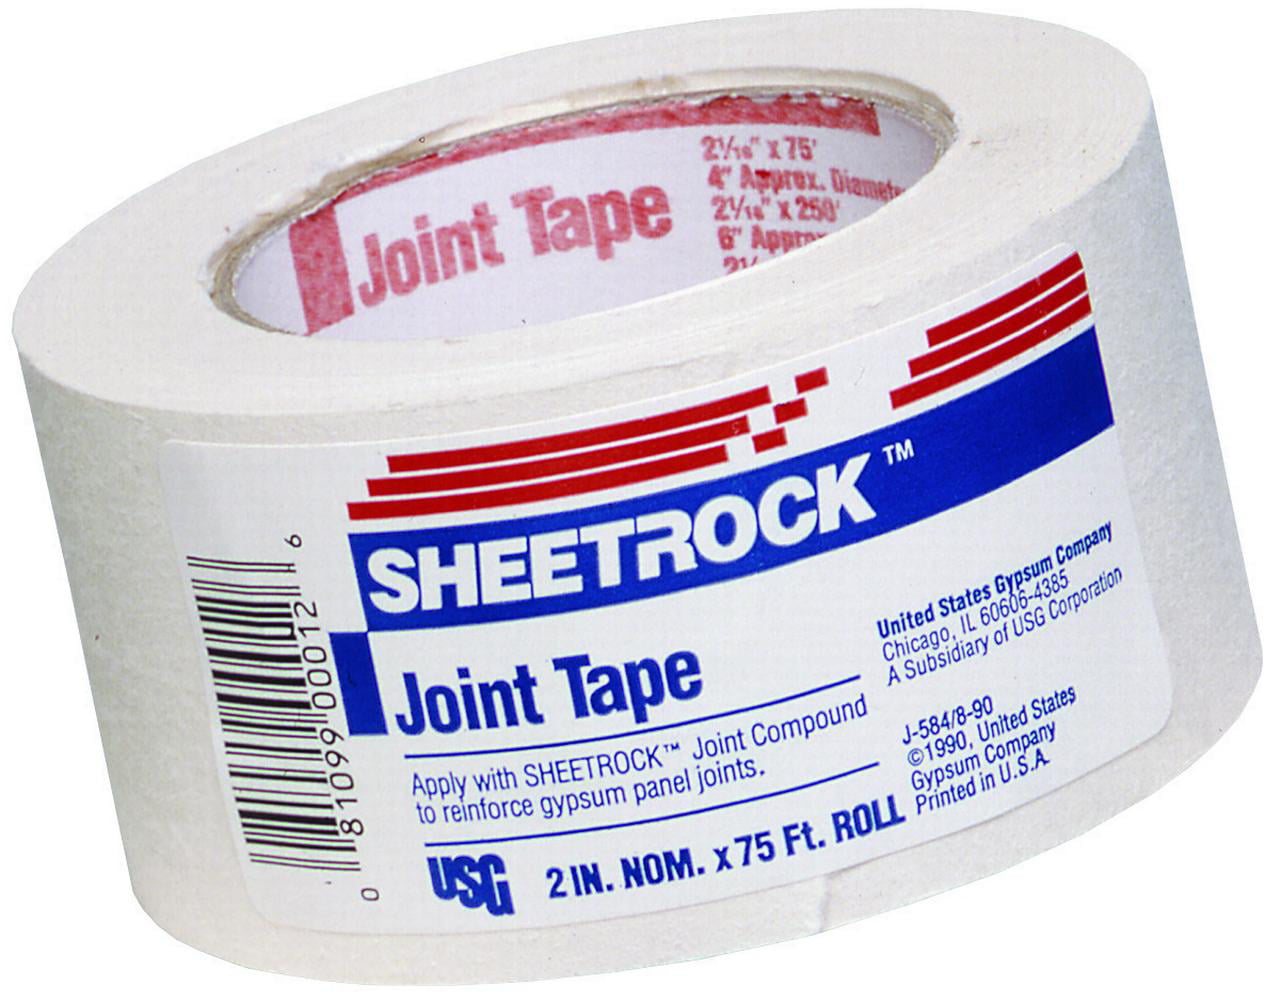 Saint-Gobain ADFORS FDW6619-U FibaTape Paper Drywall Joint Tape 2-Inch x 500-Fee 